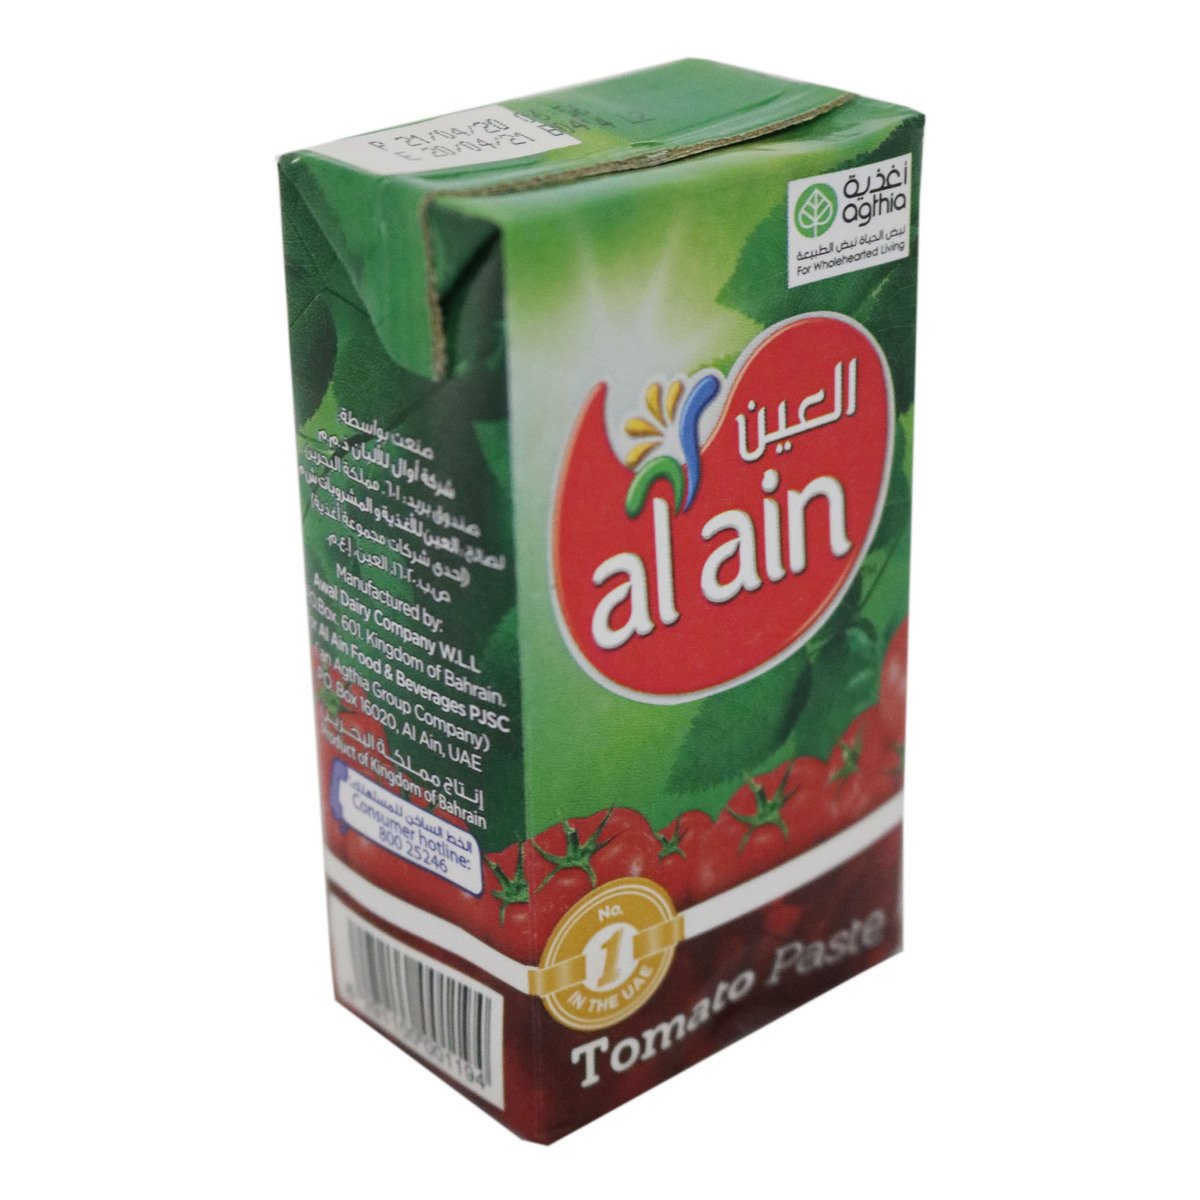 Al Ain Tomato Paste Tetra 135g